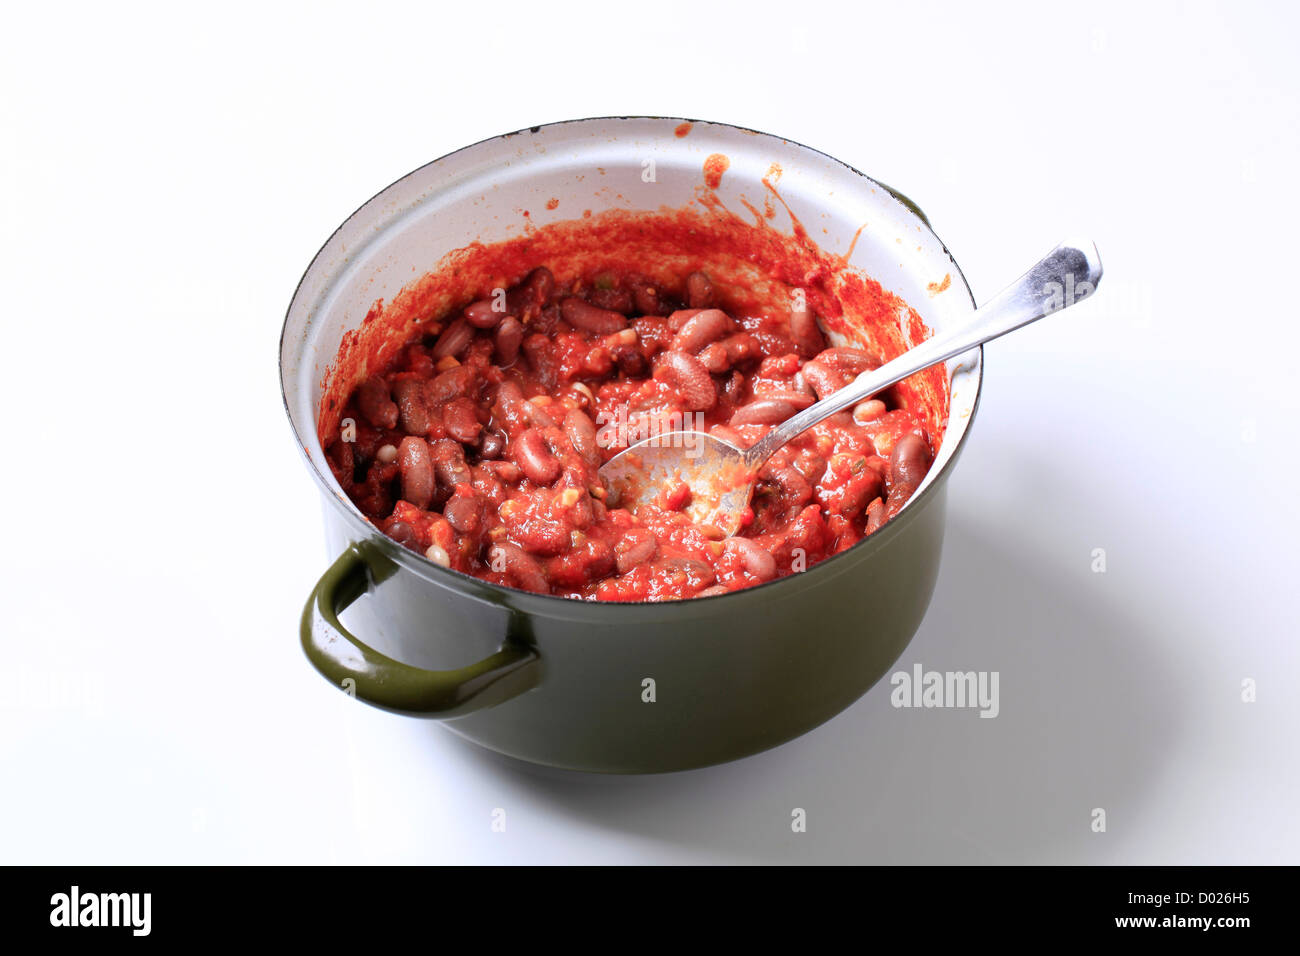 Vegetarian kidney bean chili in a saucepan Stock Photo